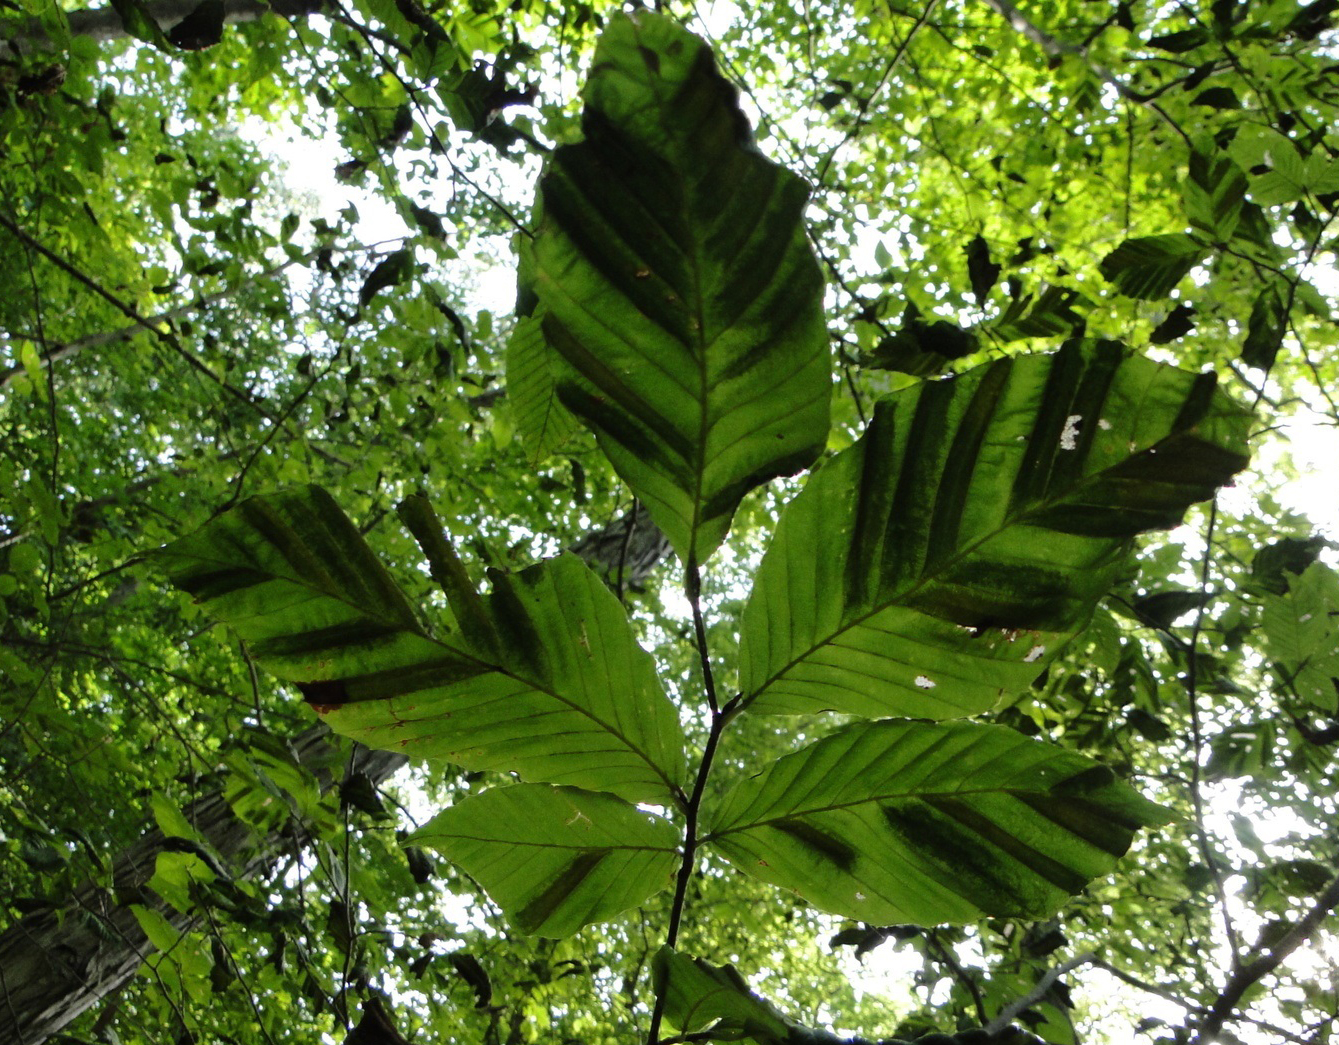 Beech leaf disease - leaf stripes